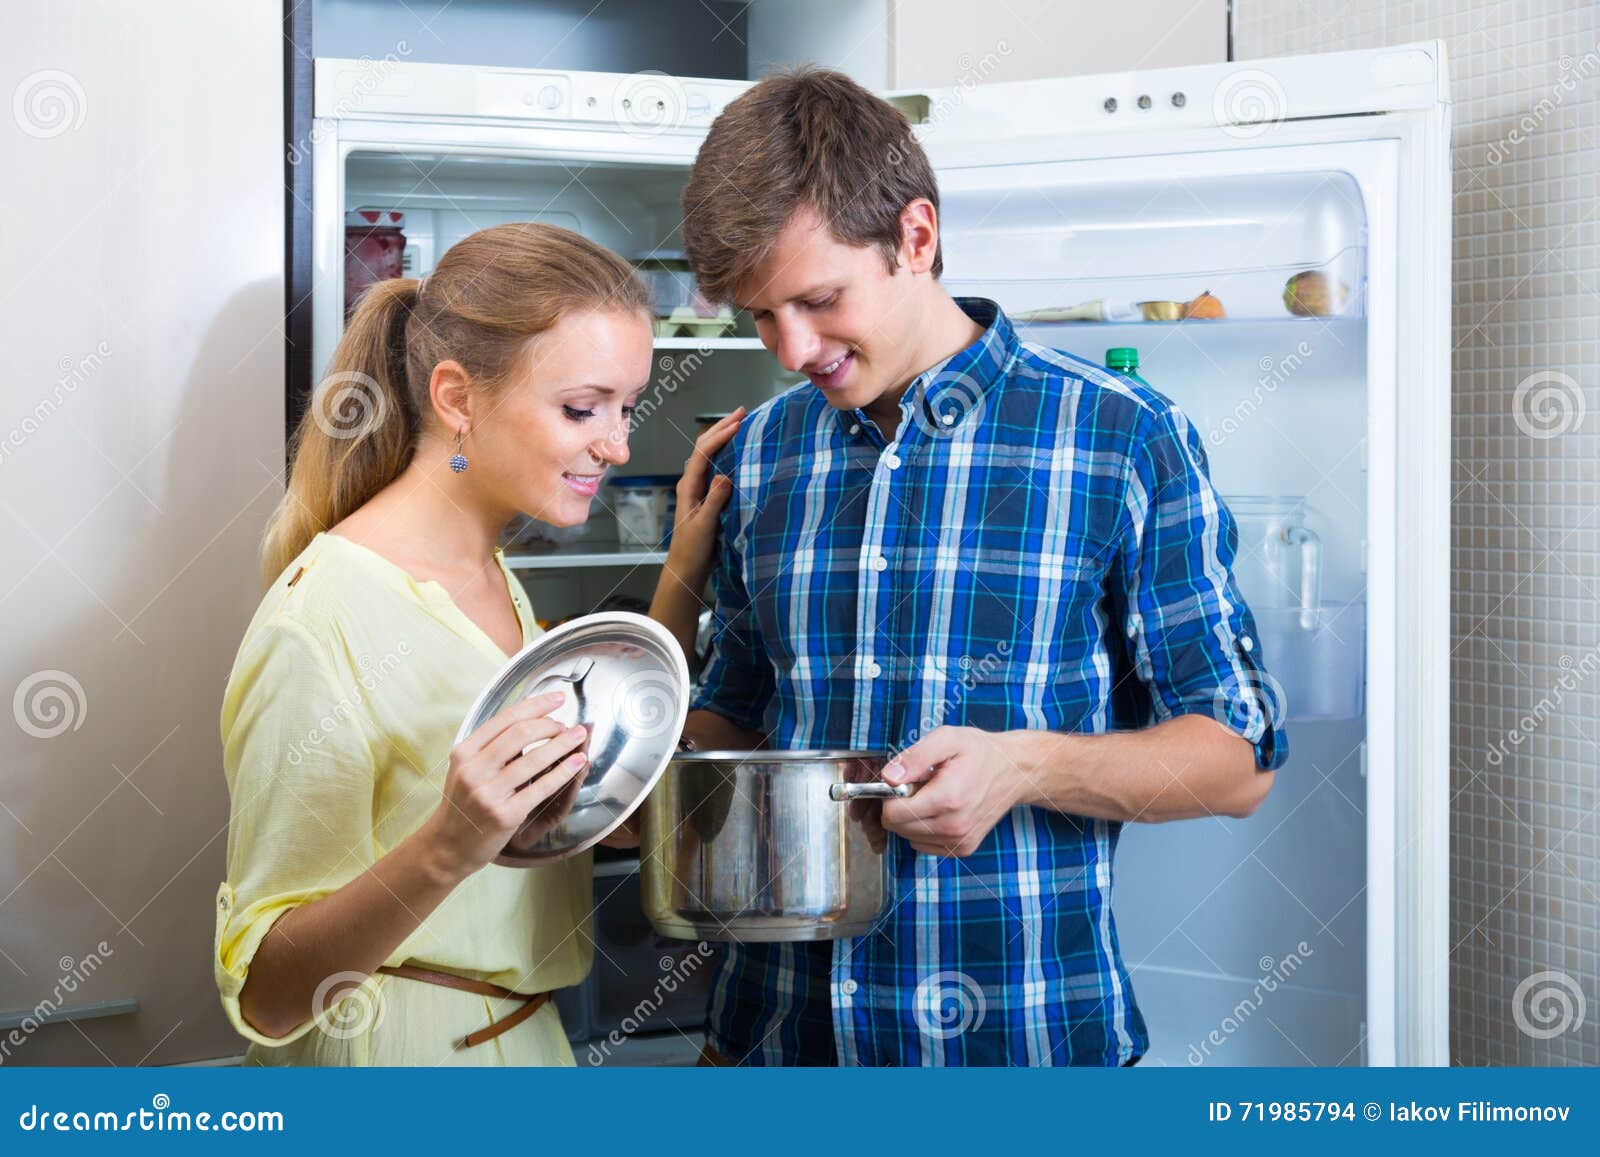 man and woman standing near fridge